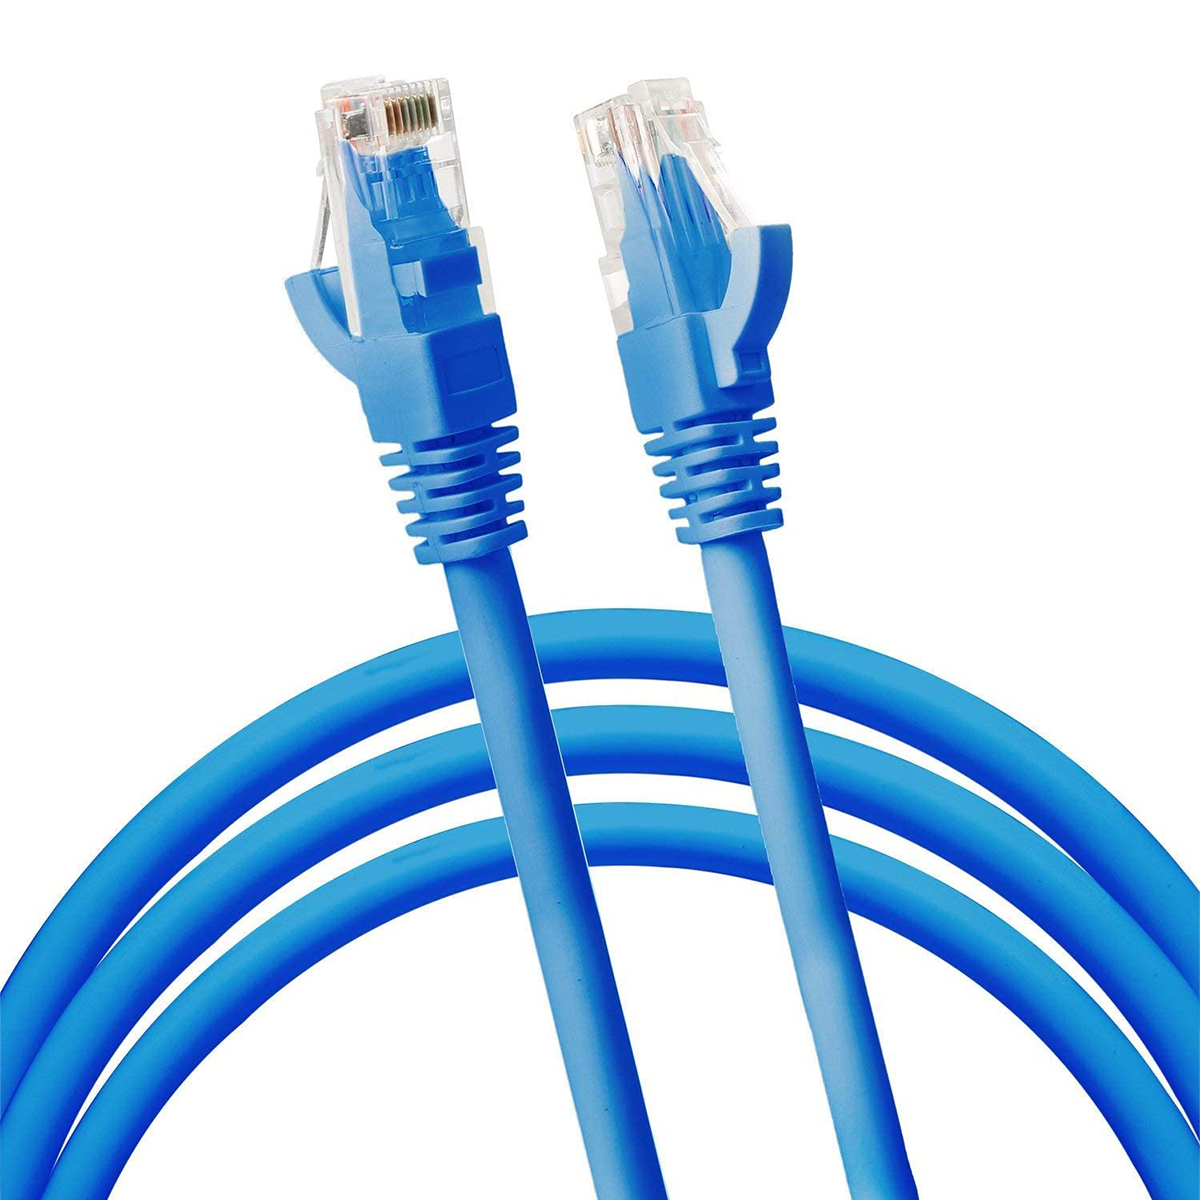 Cable de red cat. 5E, 5 metros, azul